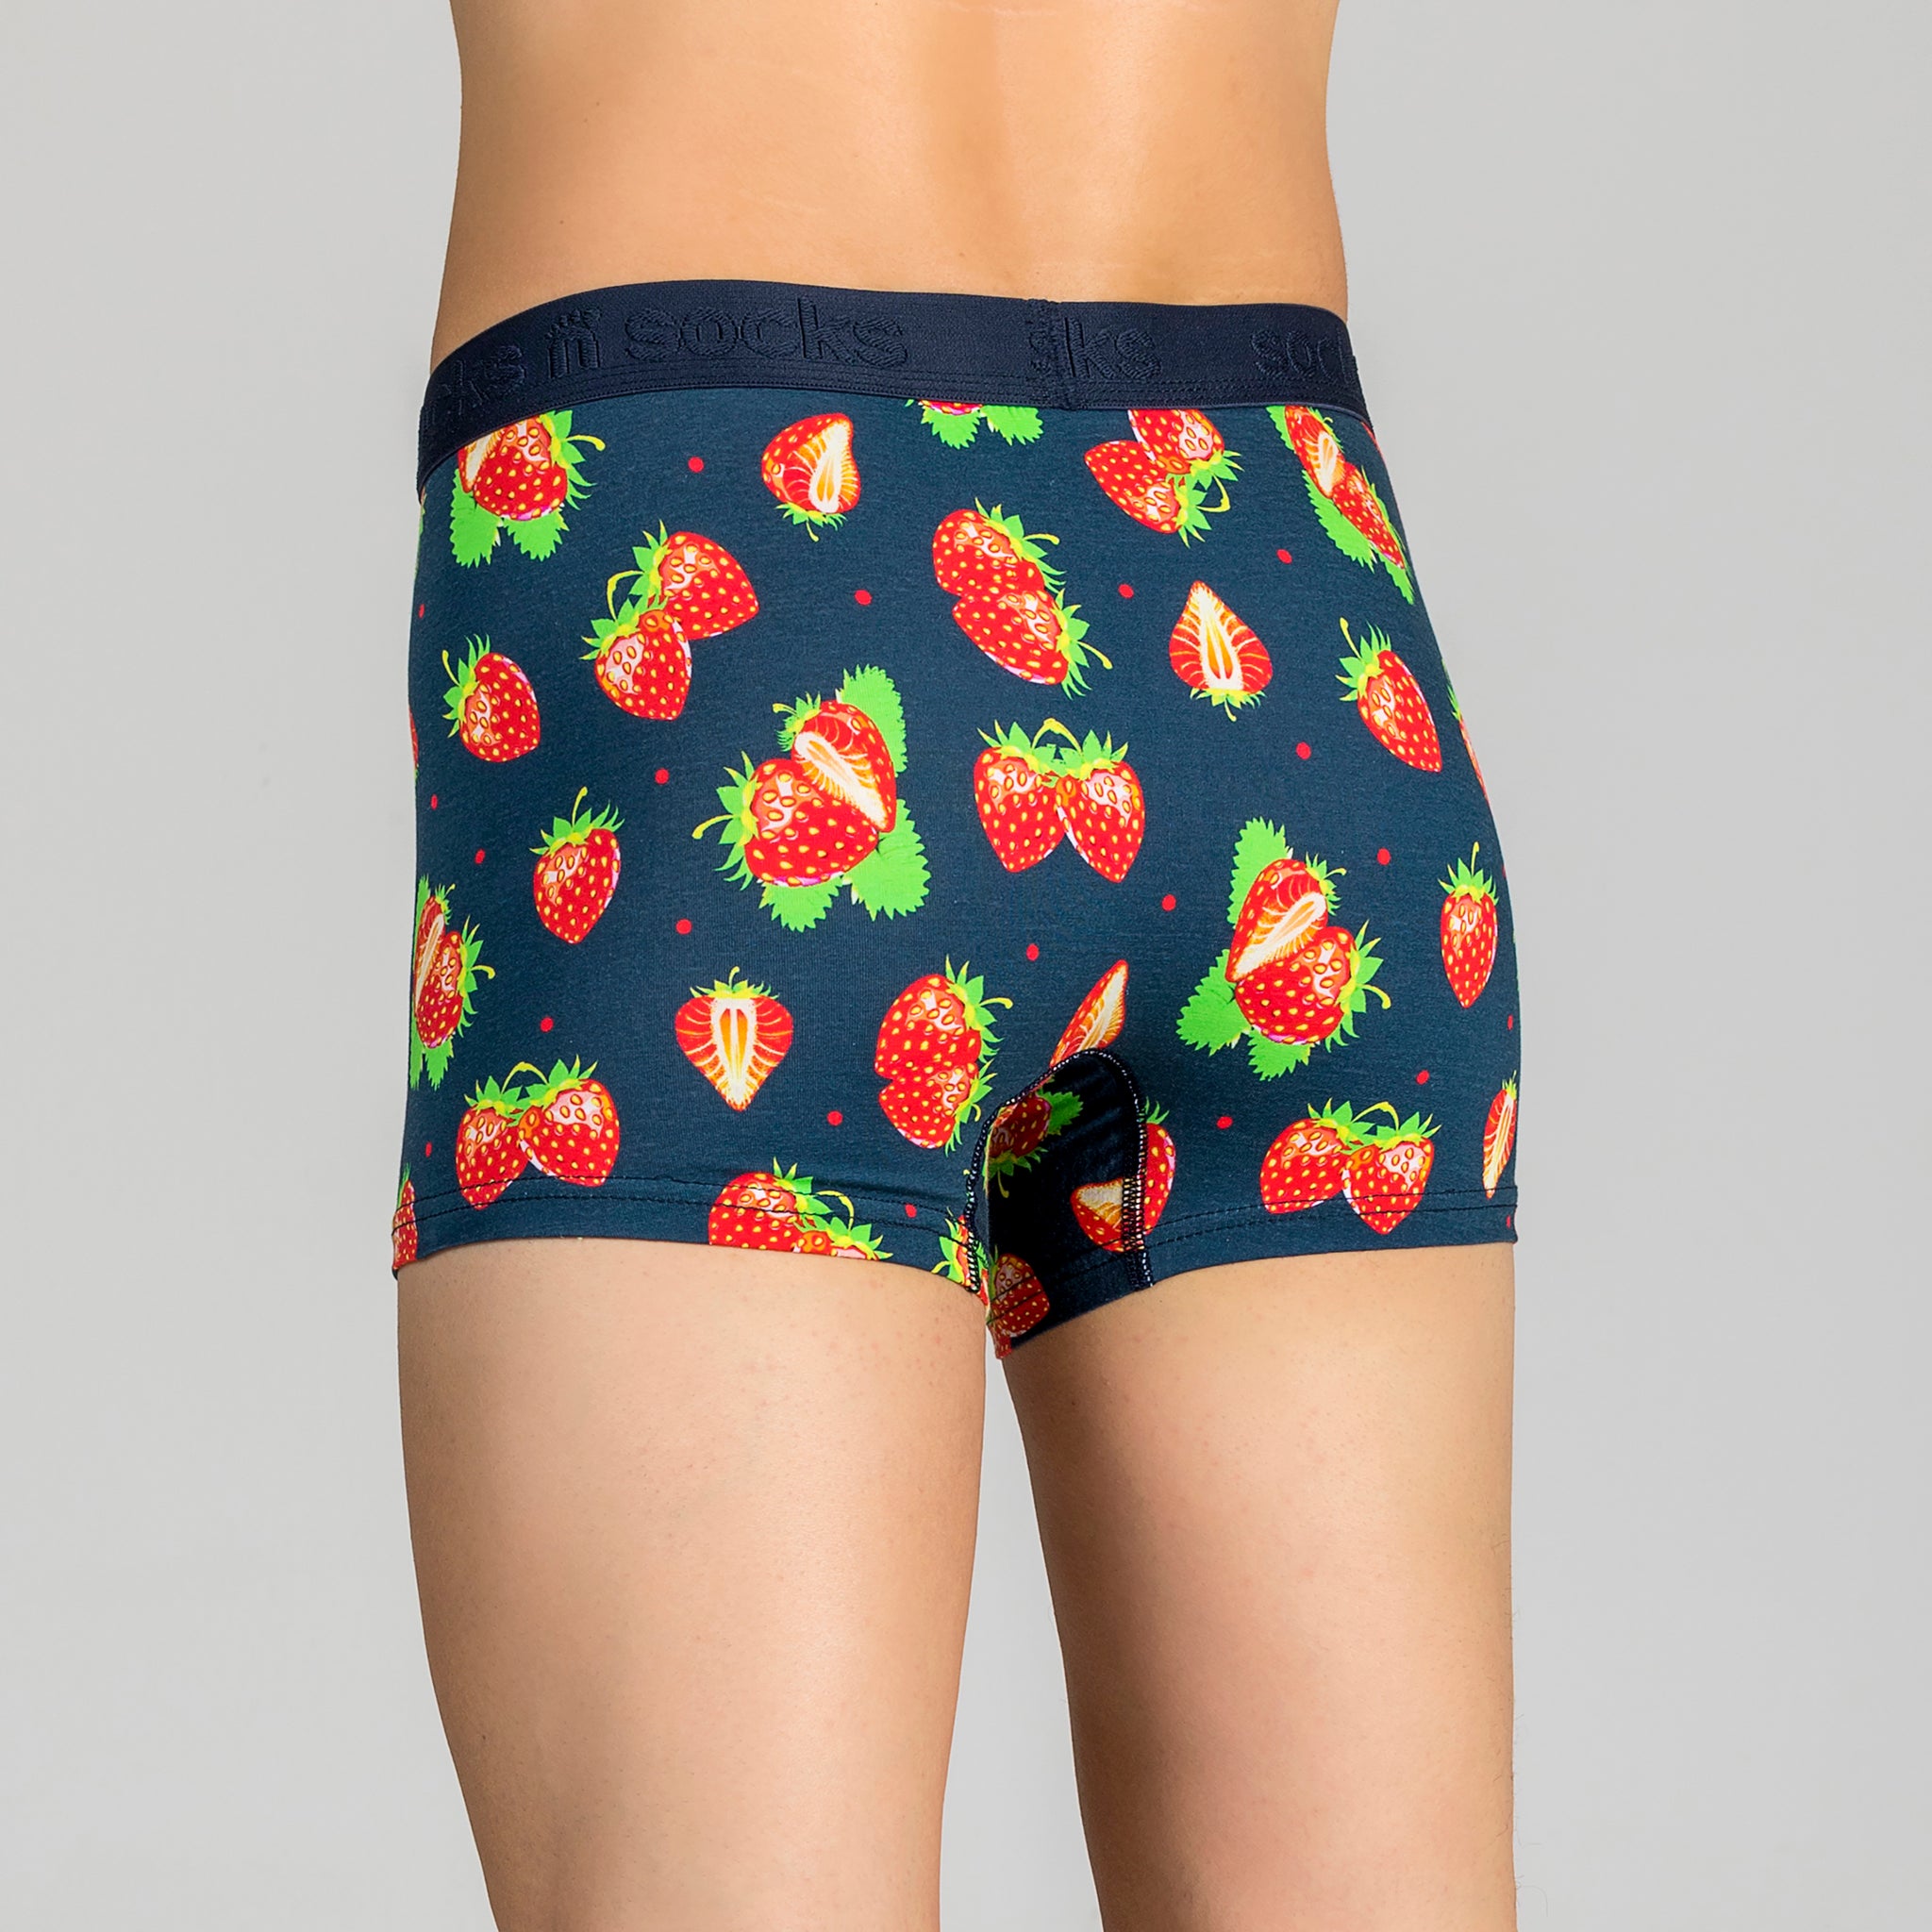 Men's Strawberry Boxer Brief - Socks n Socks